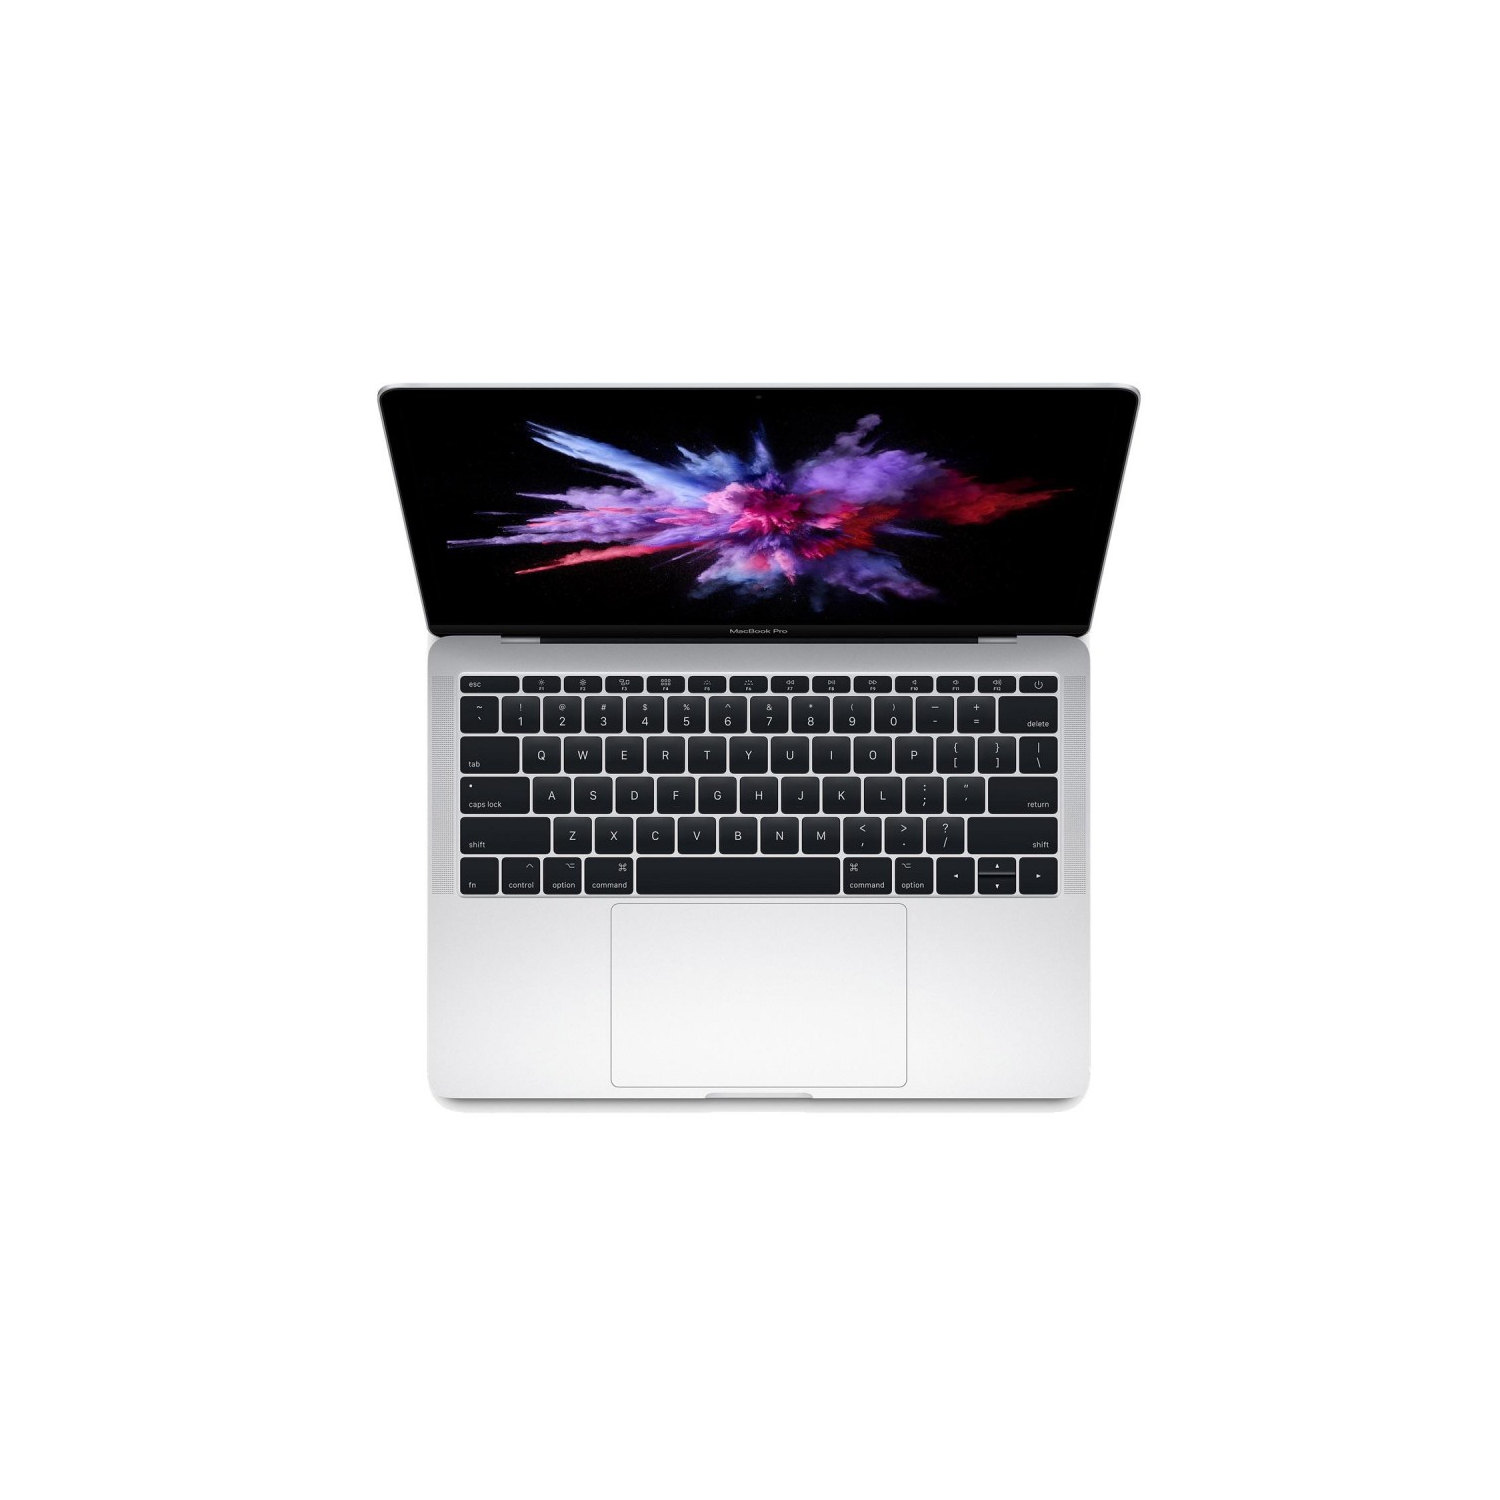 Refurbished (Excellent) - MacBook Pro Retina 13" A1708 i5 8GB / 256G SSD (2017 Model) -Grade A 9/10! macOS Catalina New Apple Power Adapter